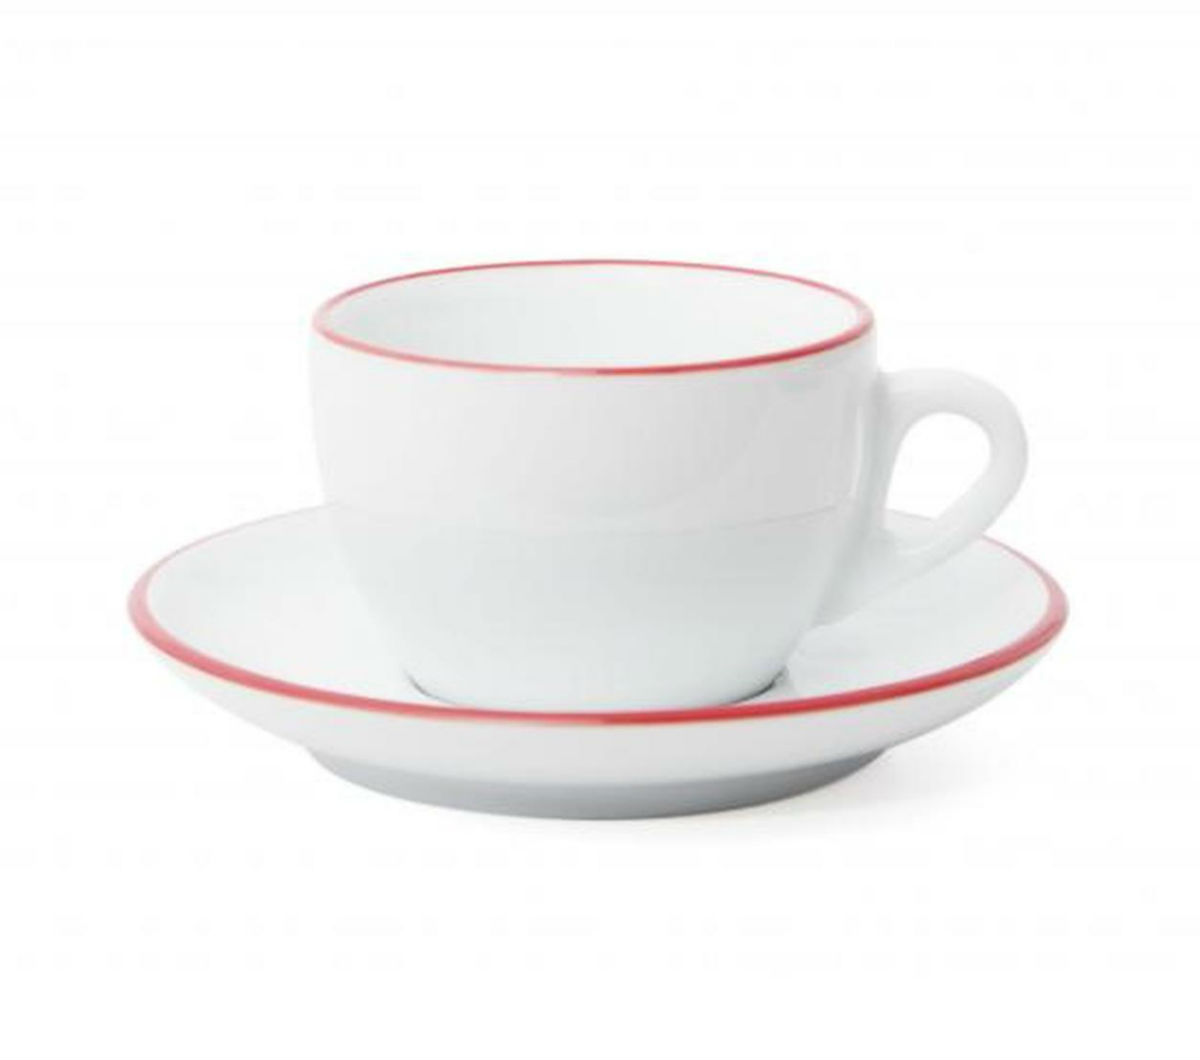 "VERONA" RED RIM Cappuccino Cups S 180ml